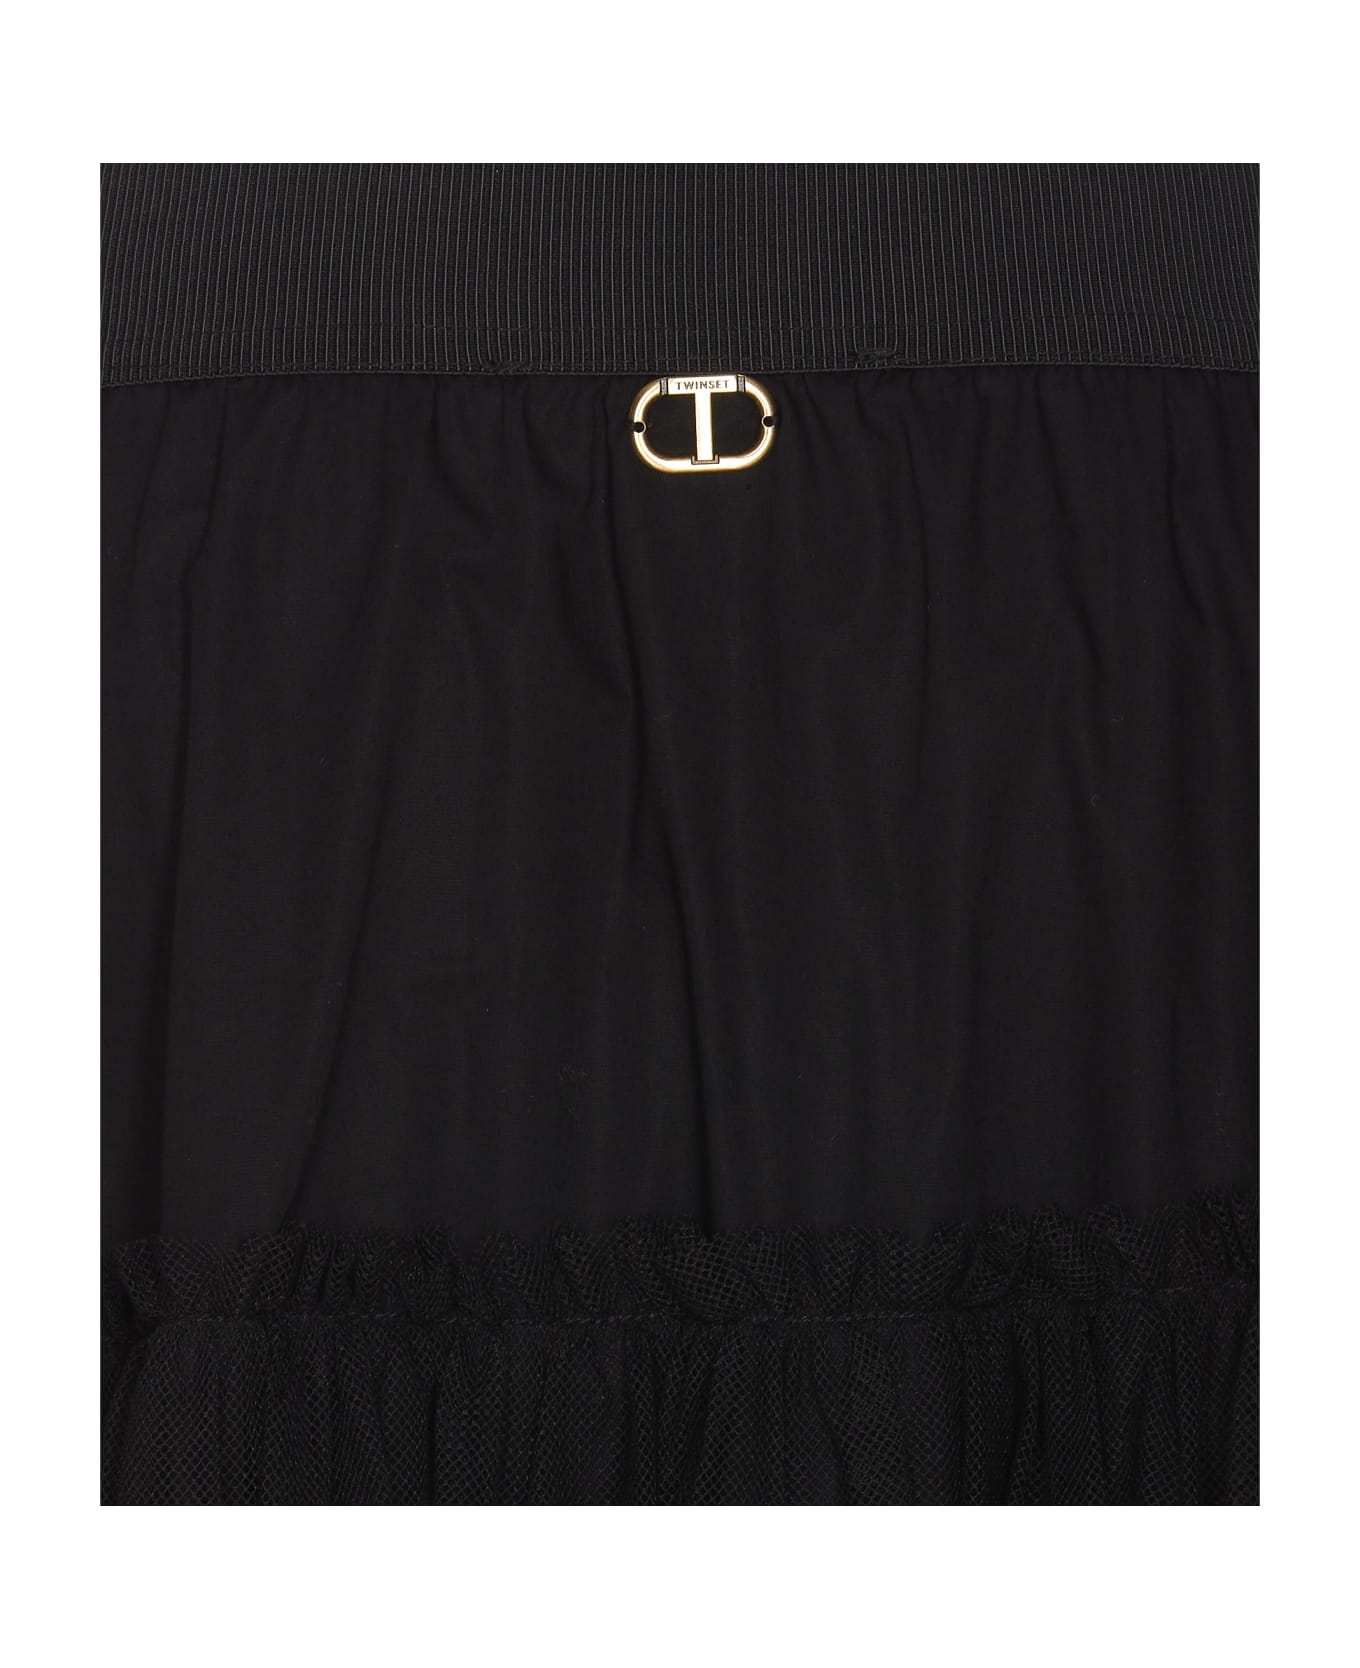 TwinSet Tulle Maxi Skirt - Black スカート